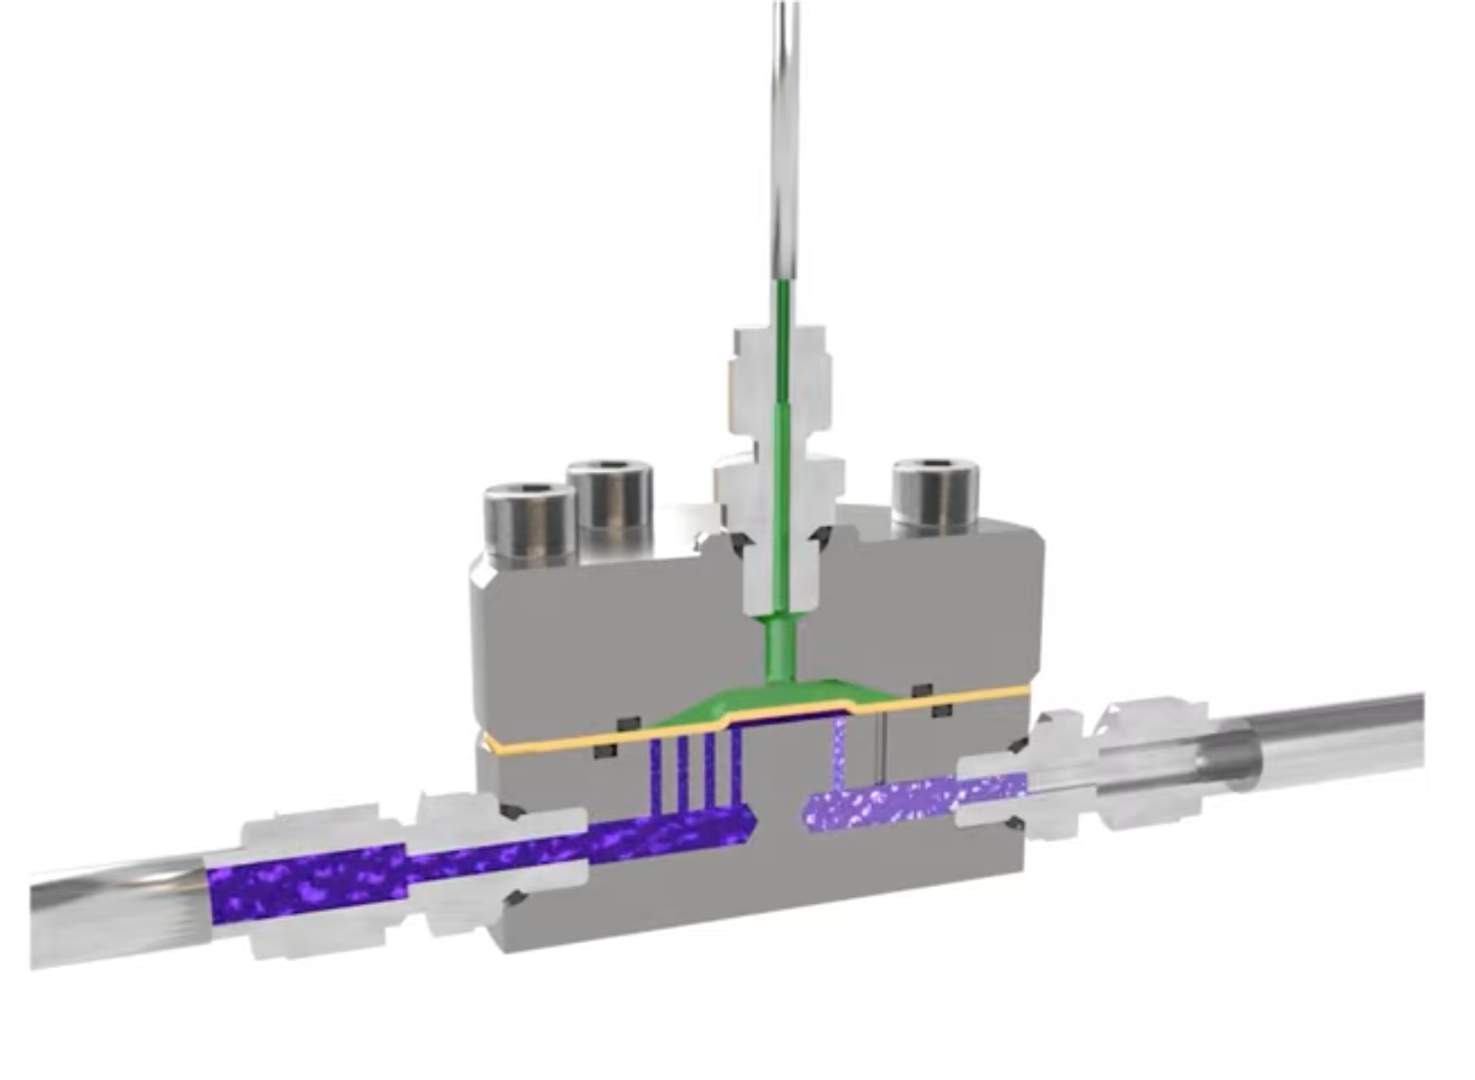 AFC animation video screenshot of valve